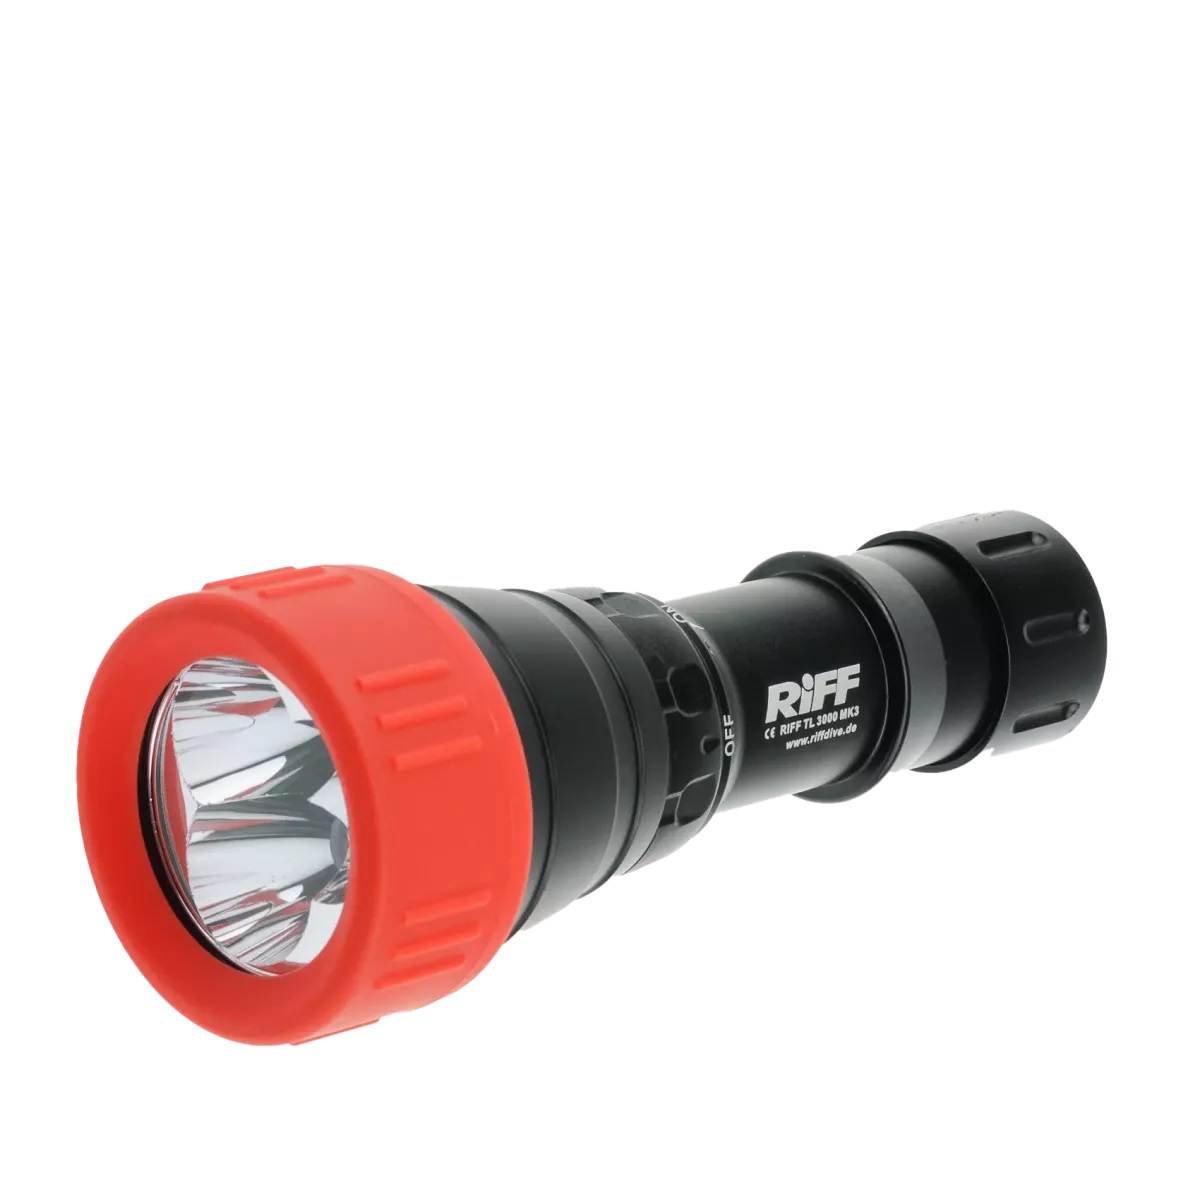 RIFF TL 3000 MK4 Spotlicht Tauchlampe Taucherlampe